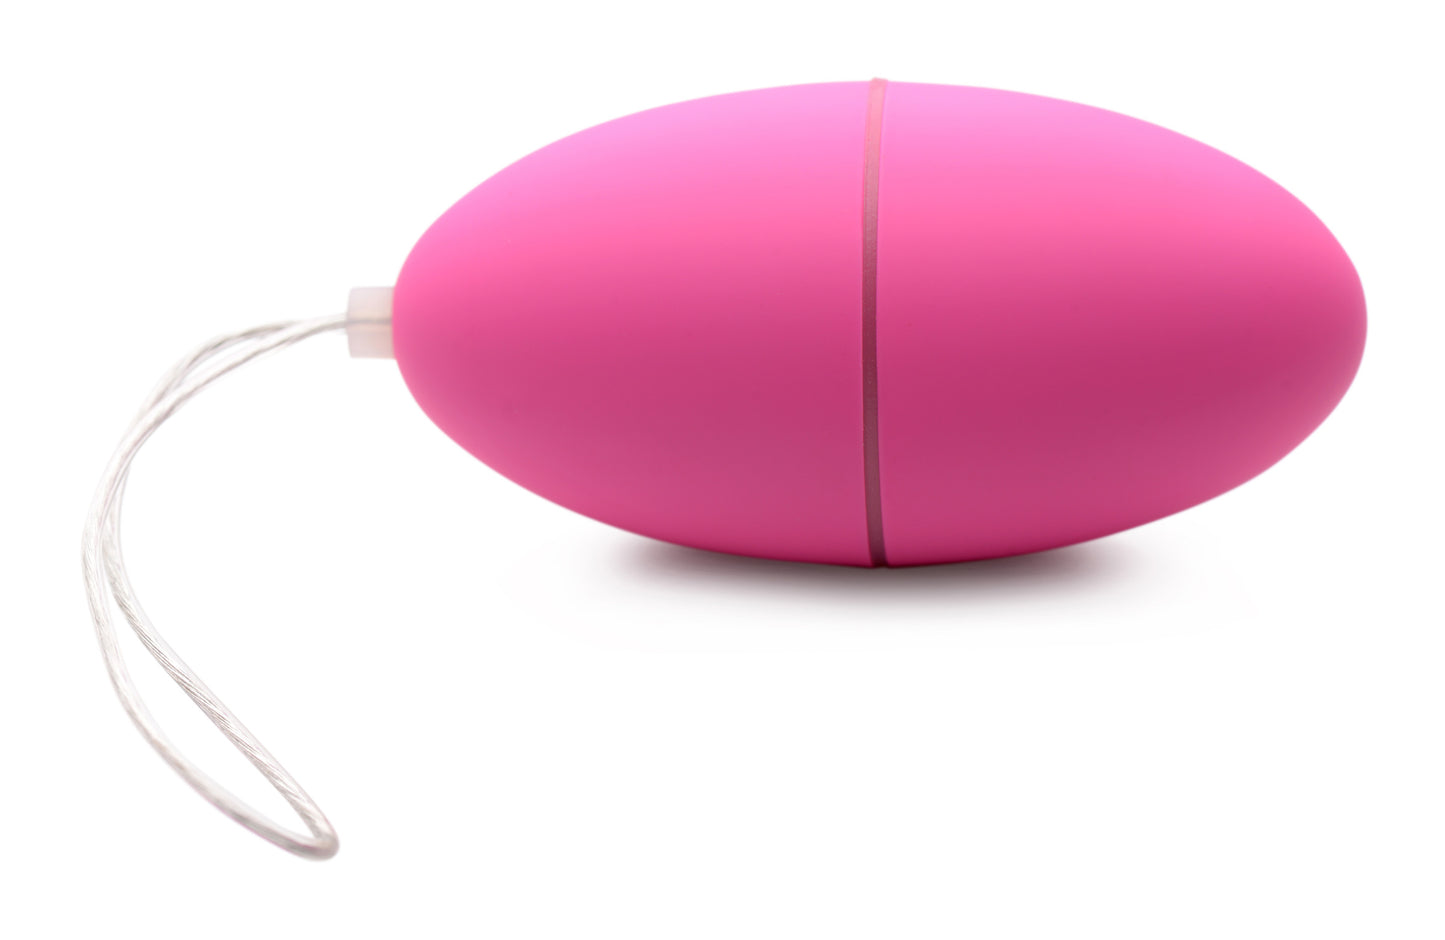 28x Scrambler Vibrating Egg With Remote Control - Pink